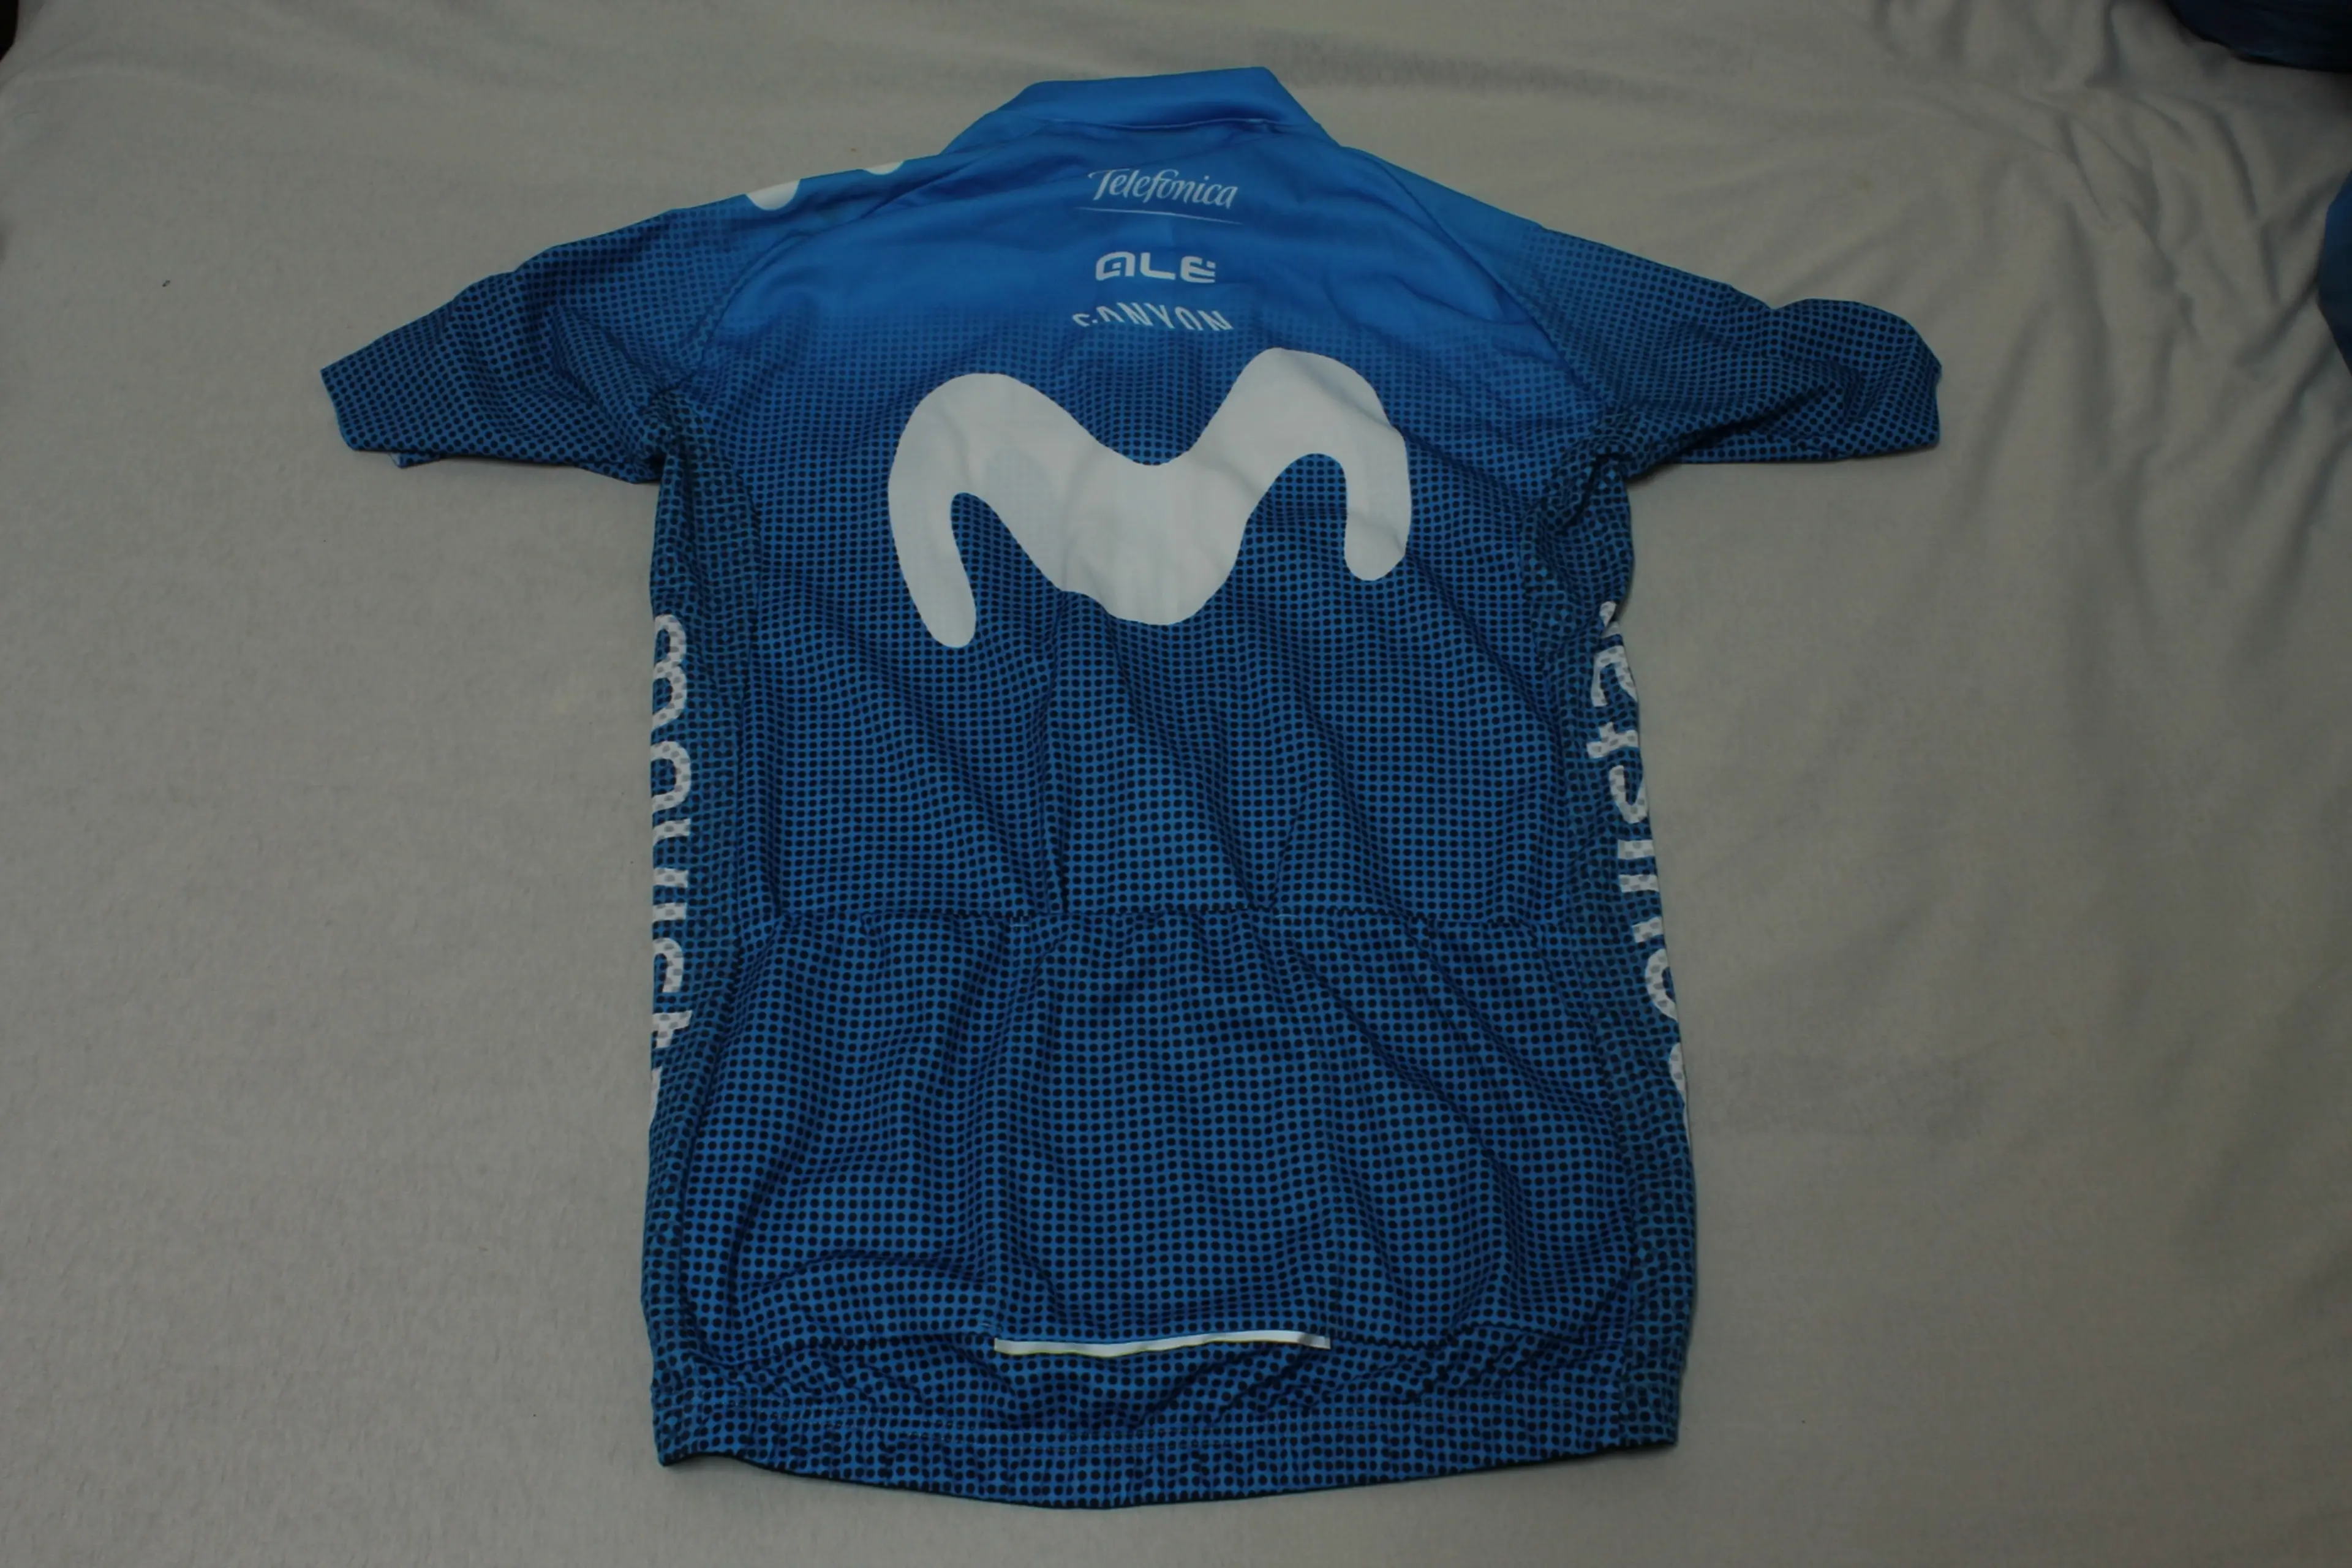 2. Tricou Ale Cycling Movistar Maglia MCSS marimi M L XL NOI